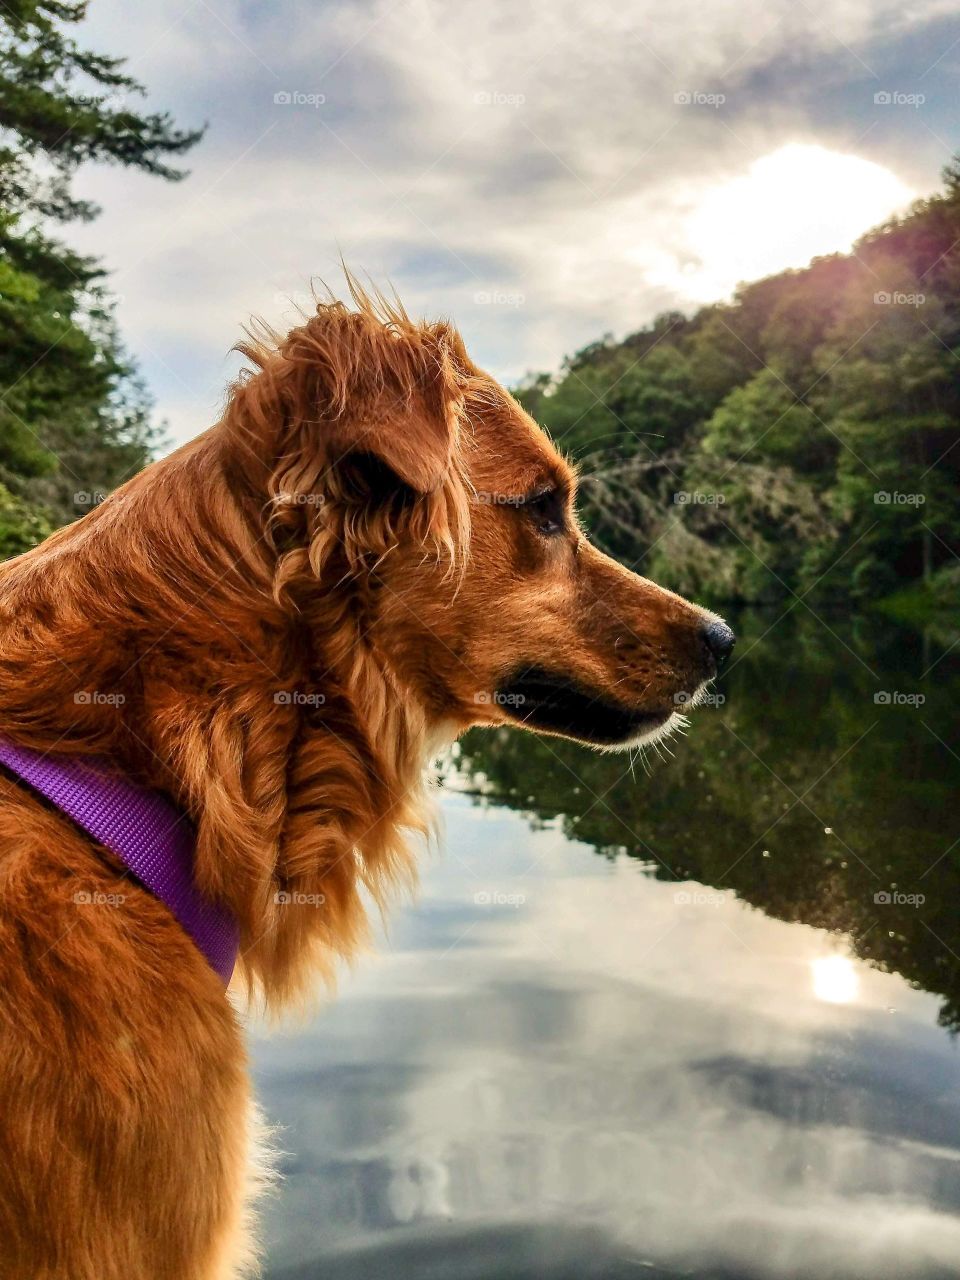 Sunny, my sweet golden retriever, enjoying a beautiful day on a scenic lake.